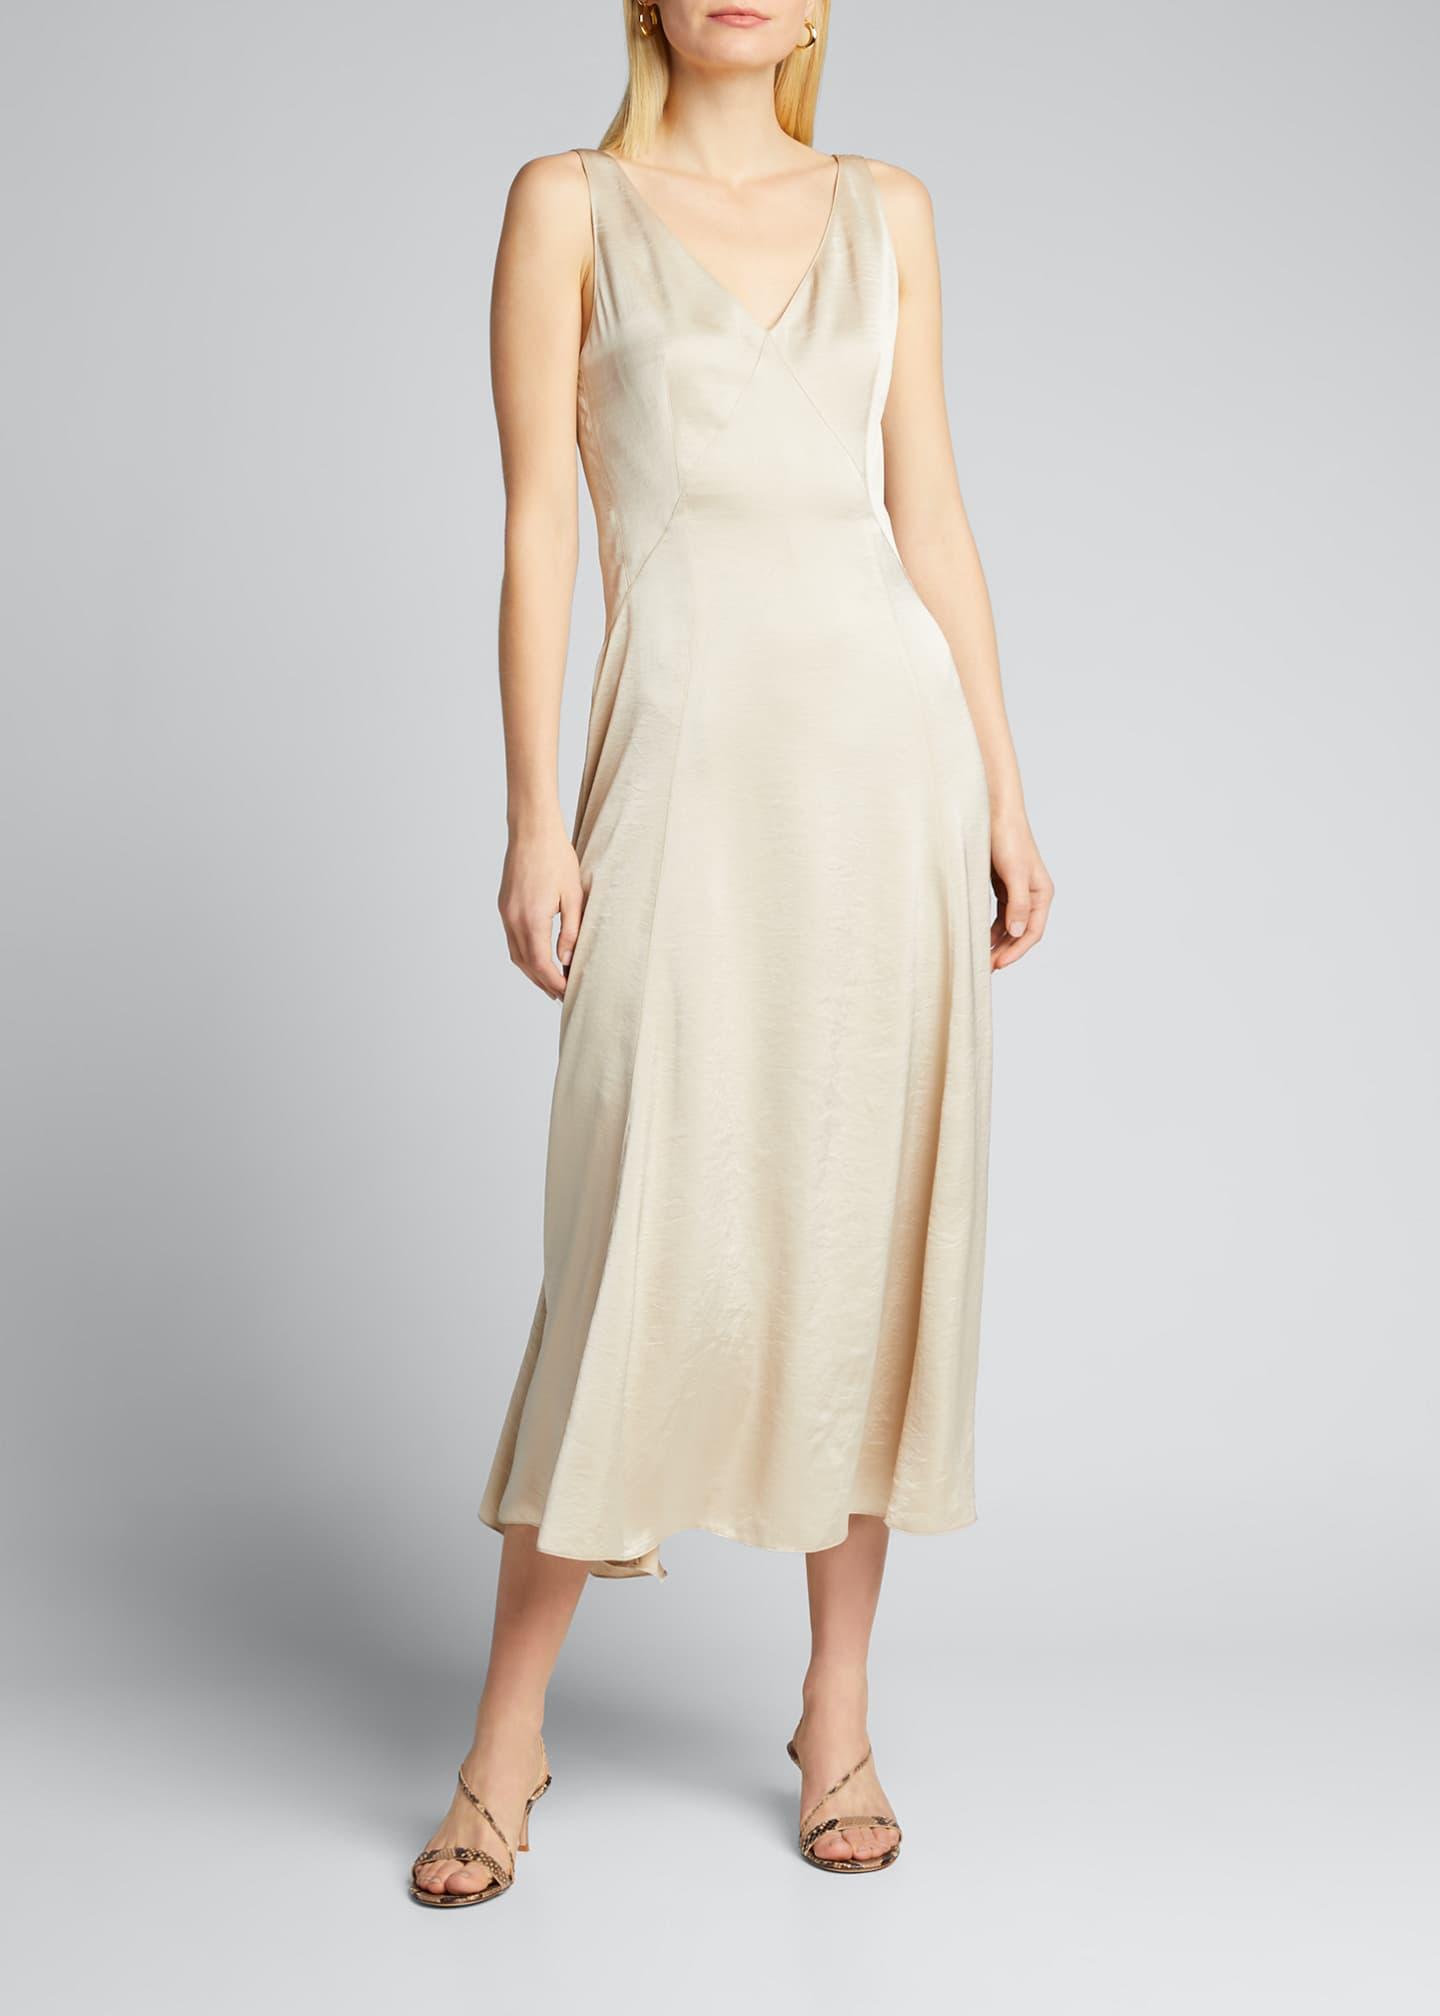 Elie Tahari Olive Sleeveless Satin Midi Dress in Natural - Save 75% - Lyst